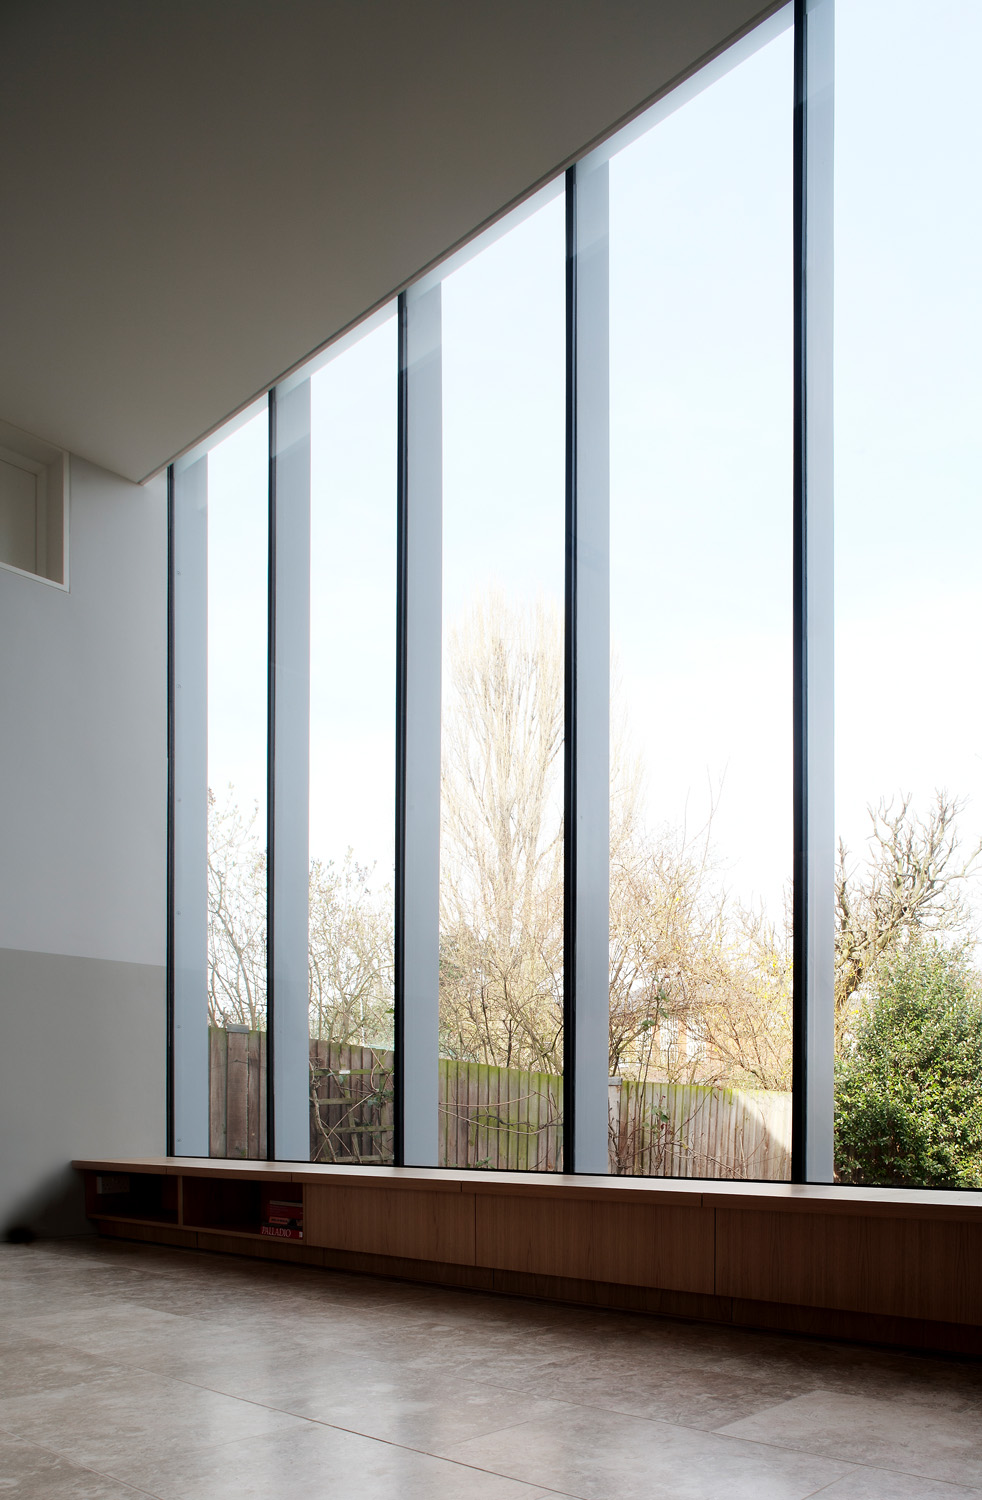 The Orangery windows by Liddicoat &amp; Goldhill contemporary architecture studio in London